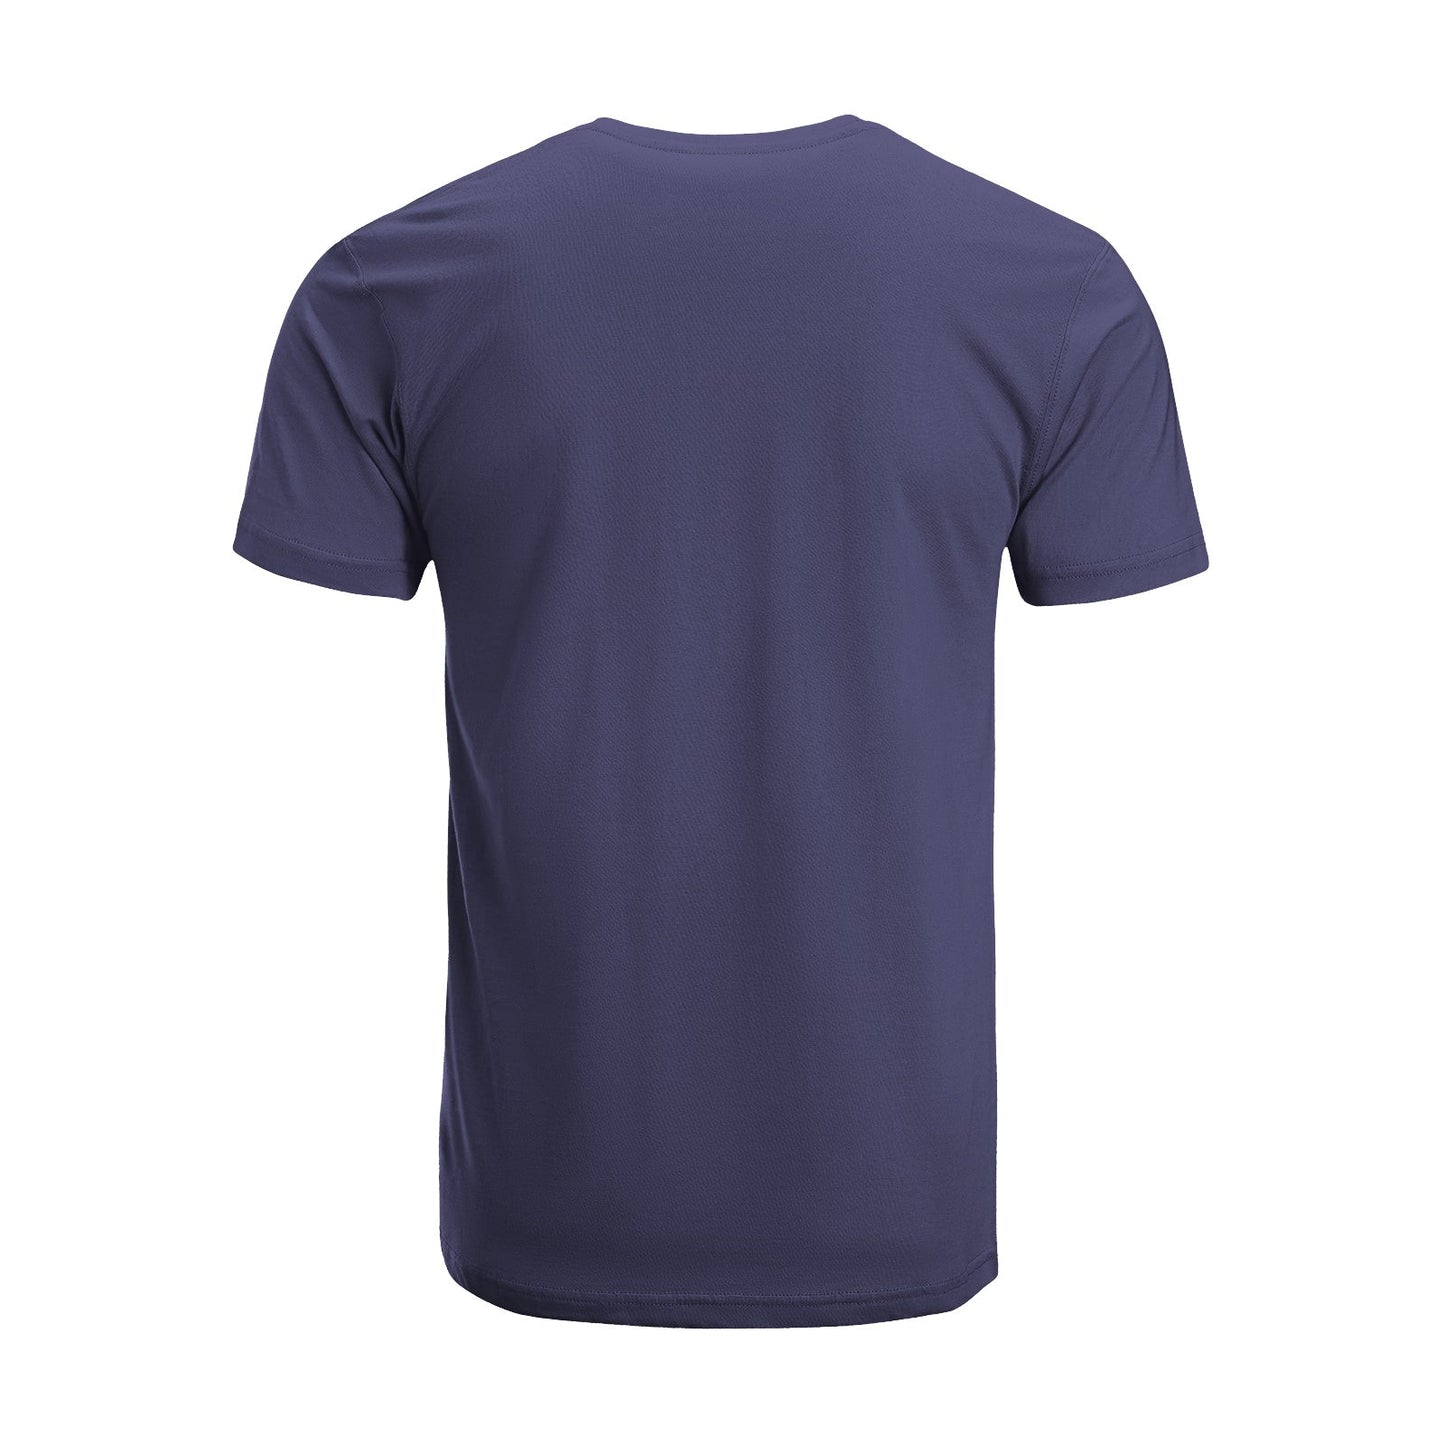 Unisex Short Sleeve Crew Neck Cotton Jersey T-Shirt USA 19